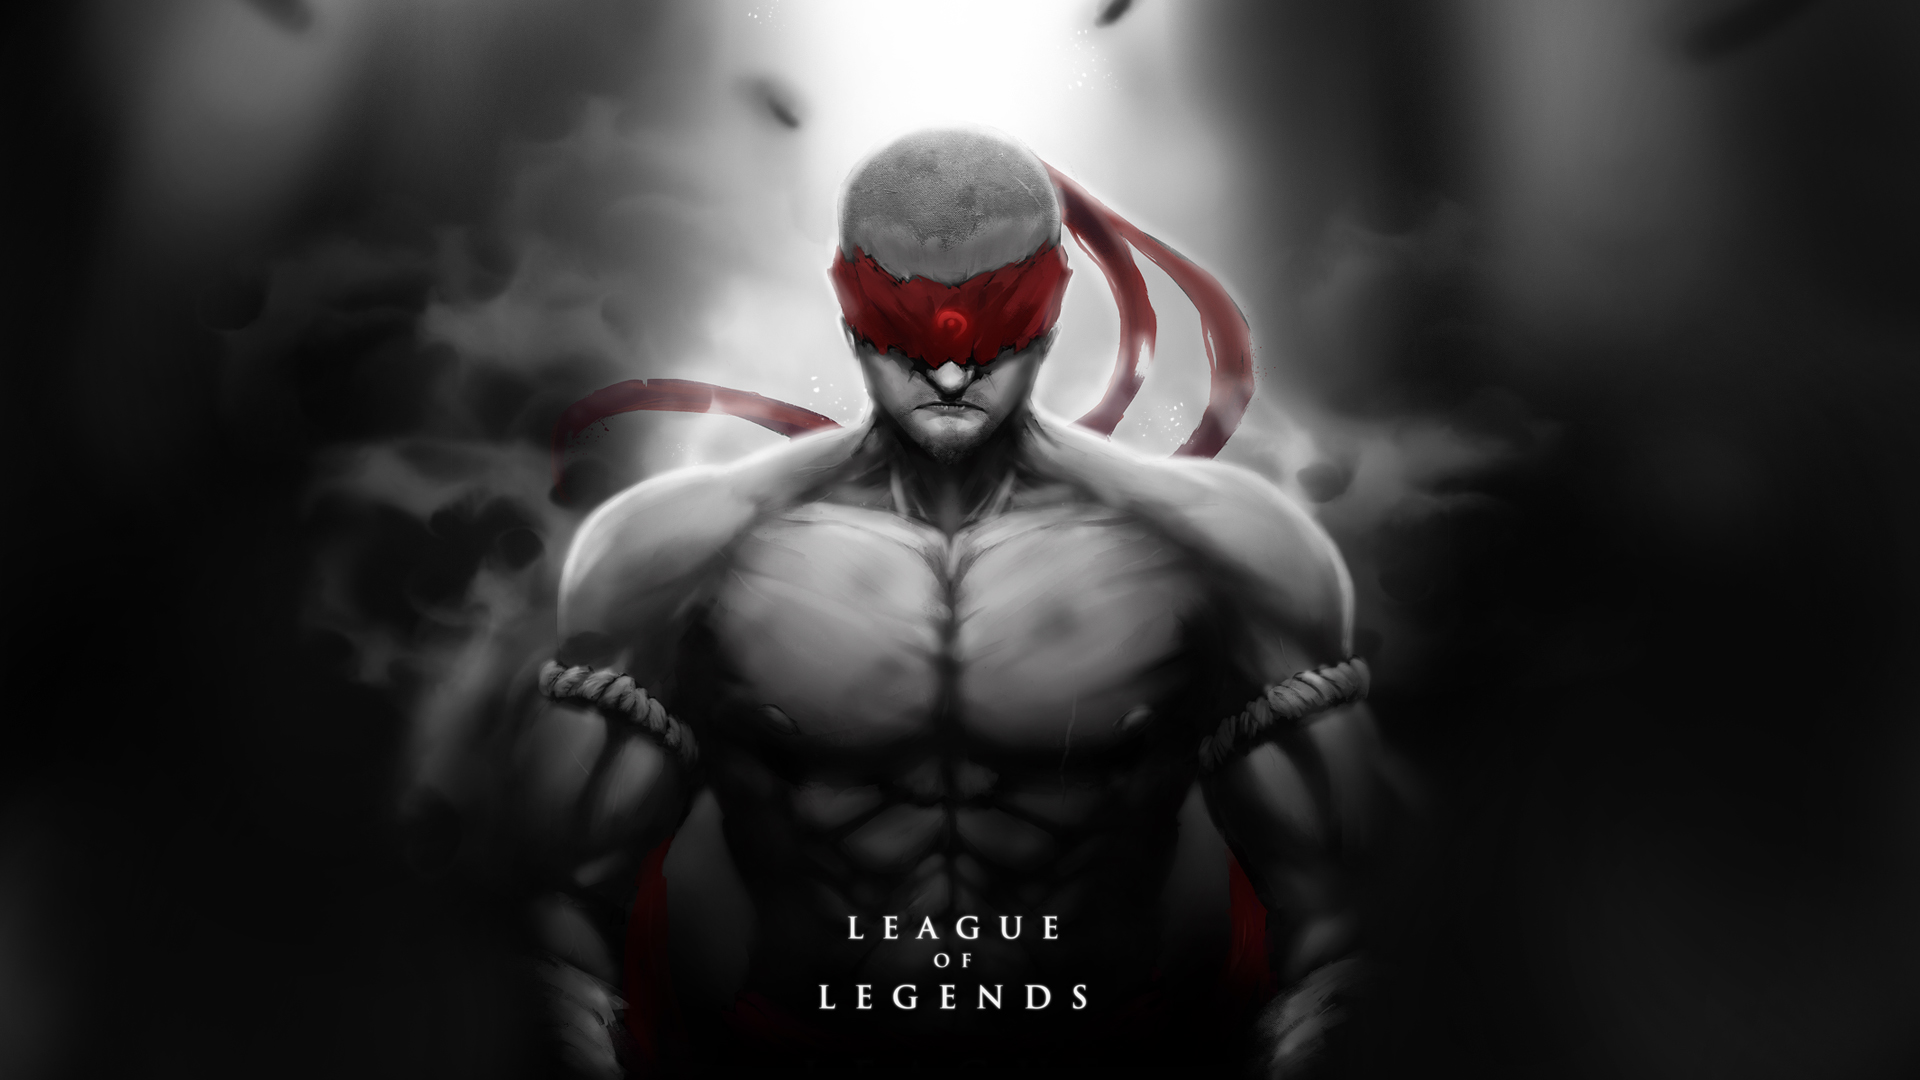 League Of Legends Lee Sin League Of Legends Shirtless 1920x1080